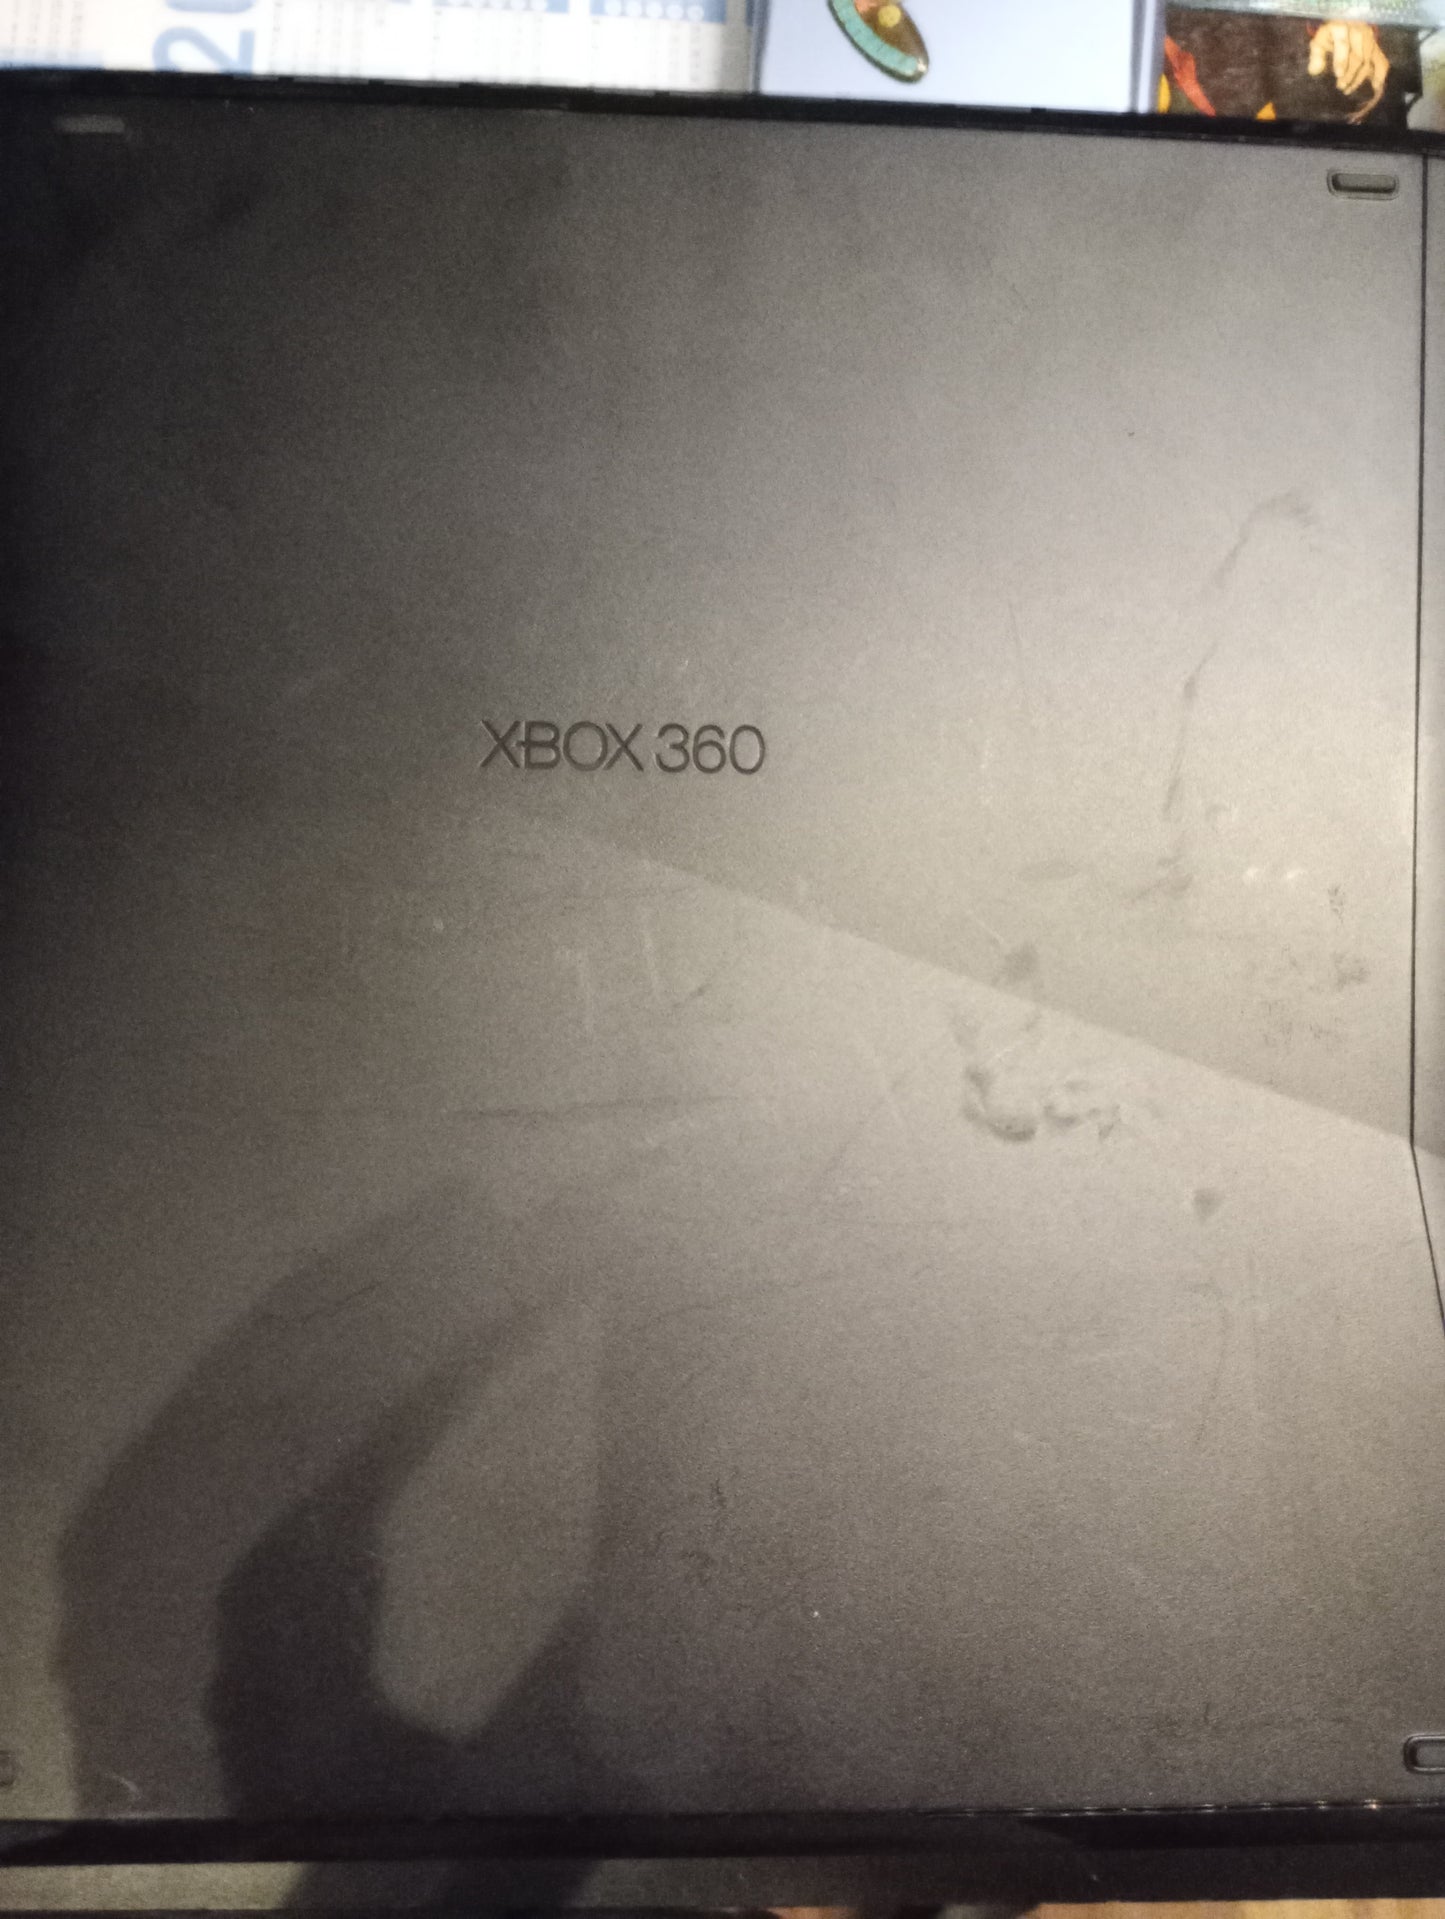 Xbox 360 250GB